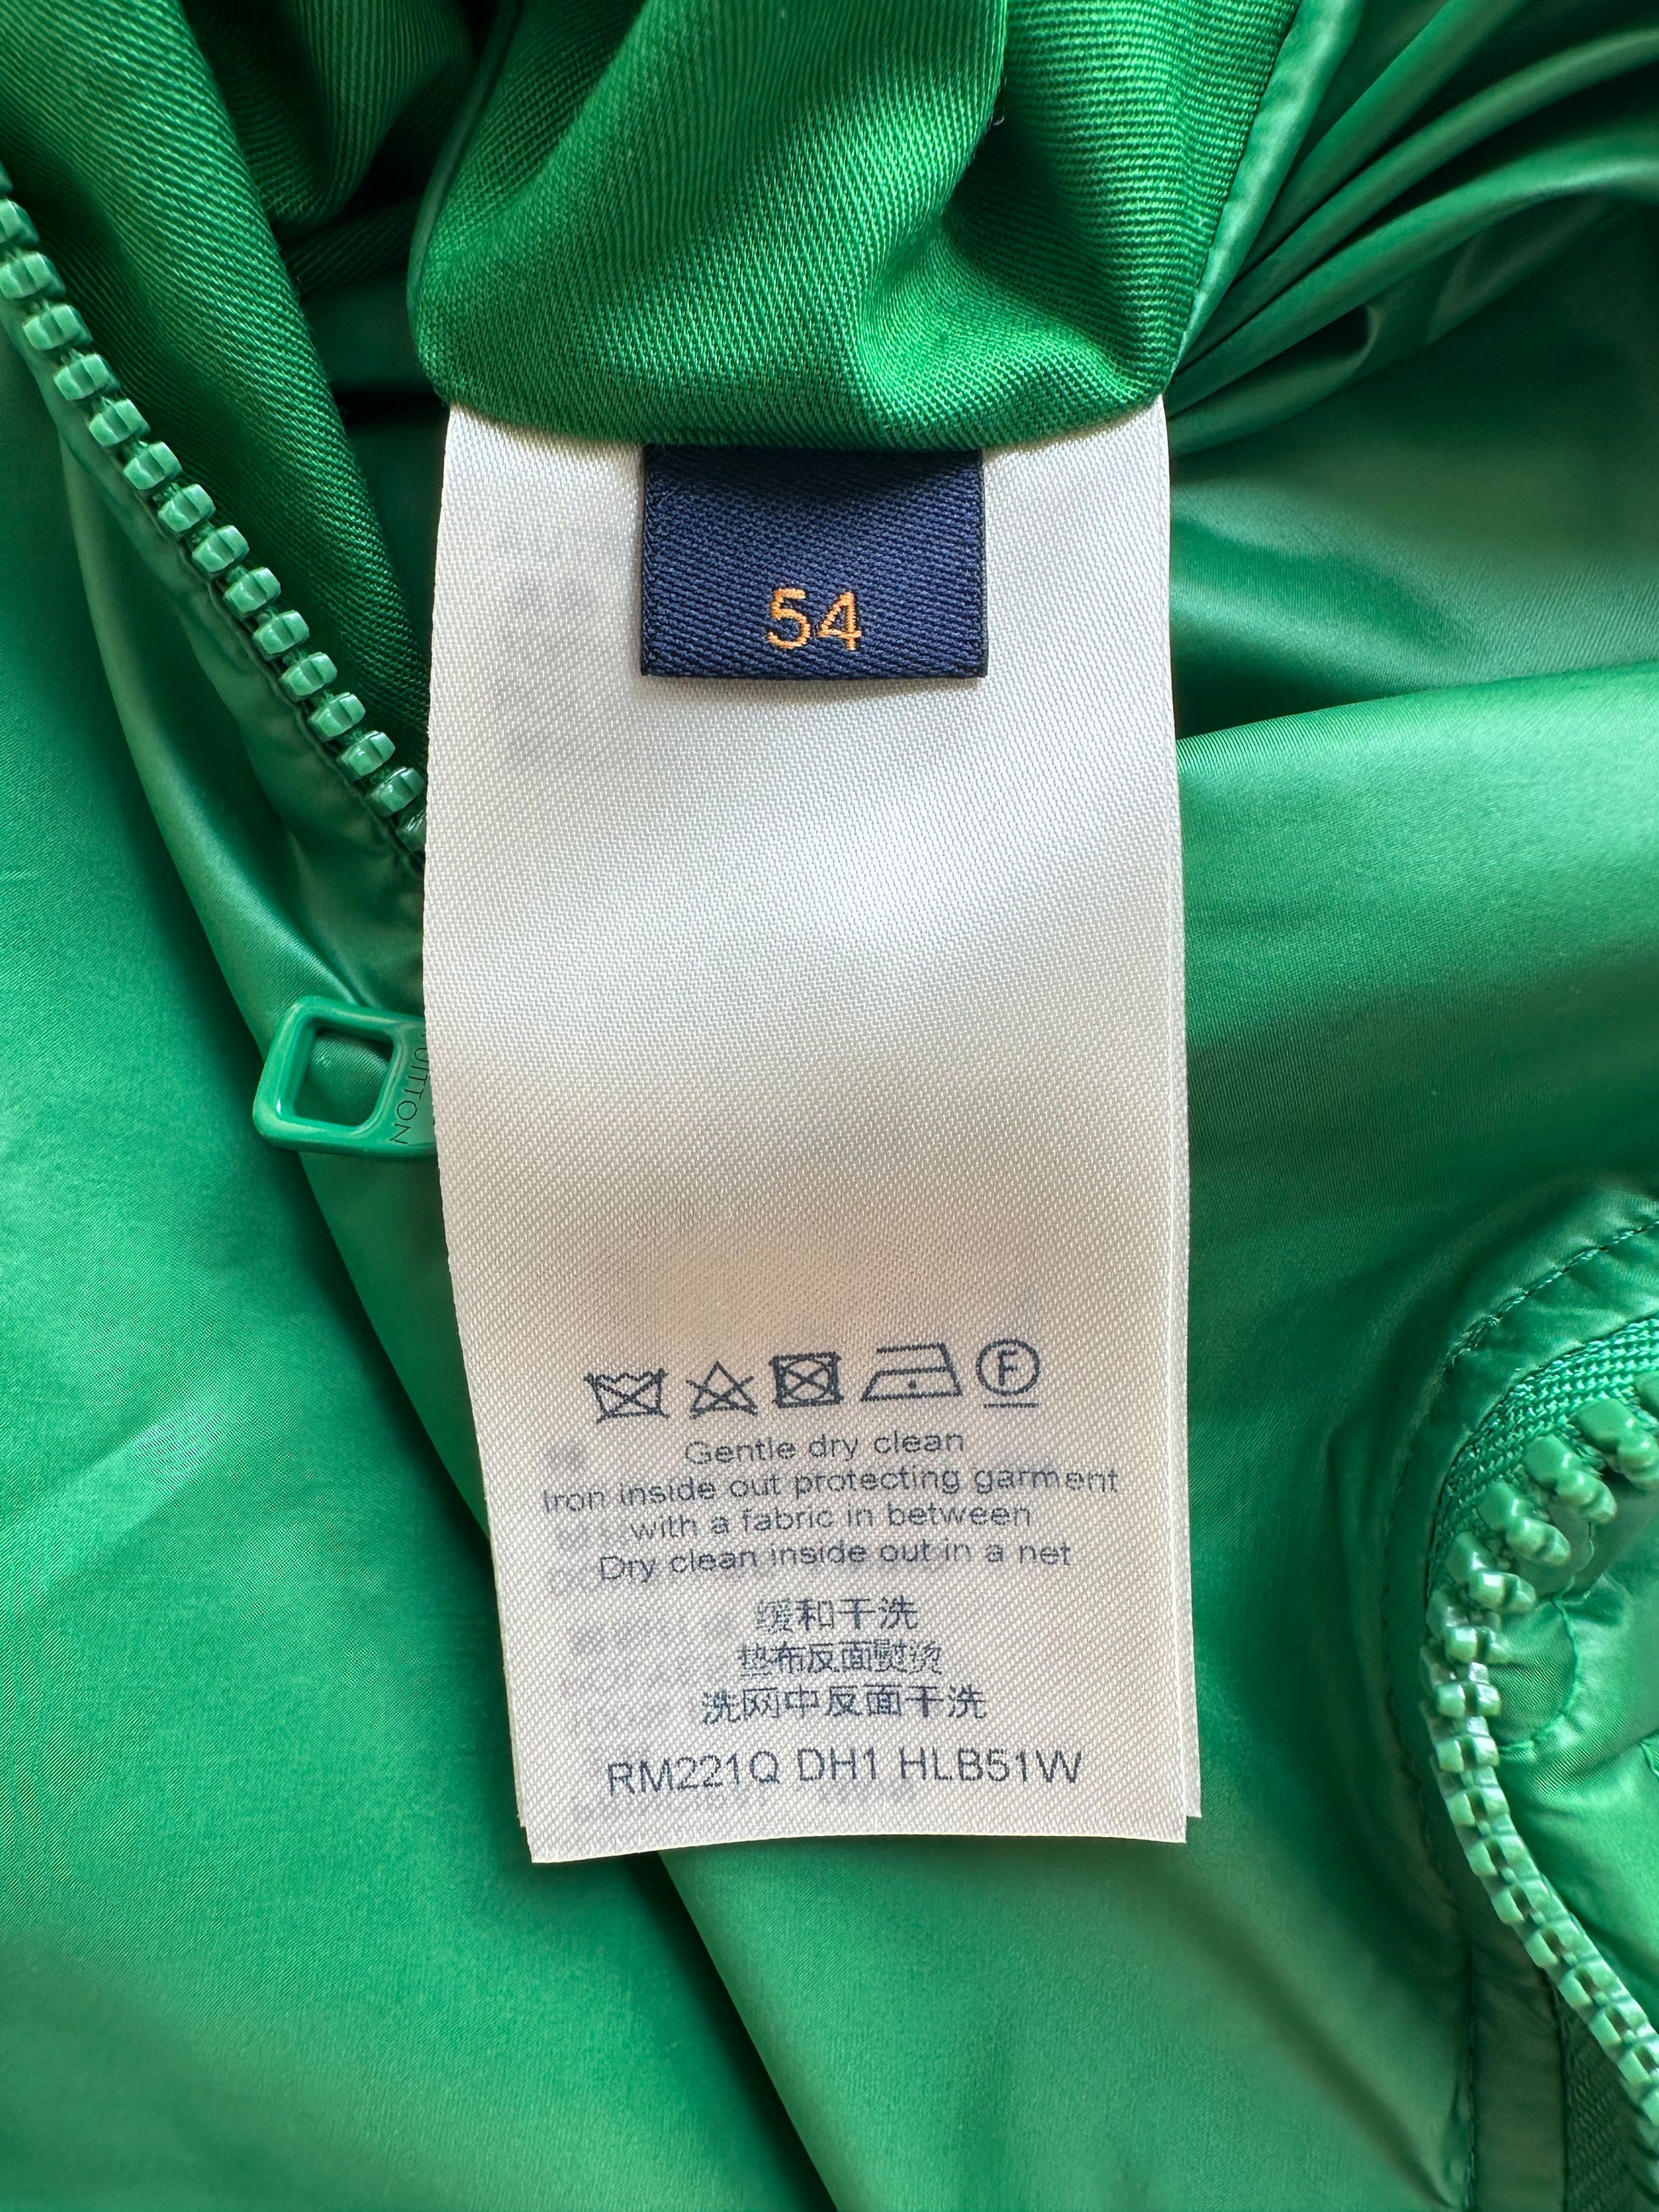 Louis Vuitton Green Monogram Puffer Jacket